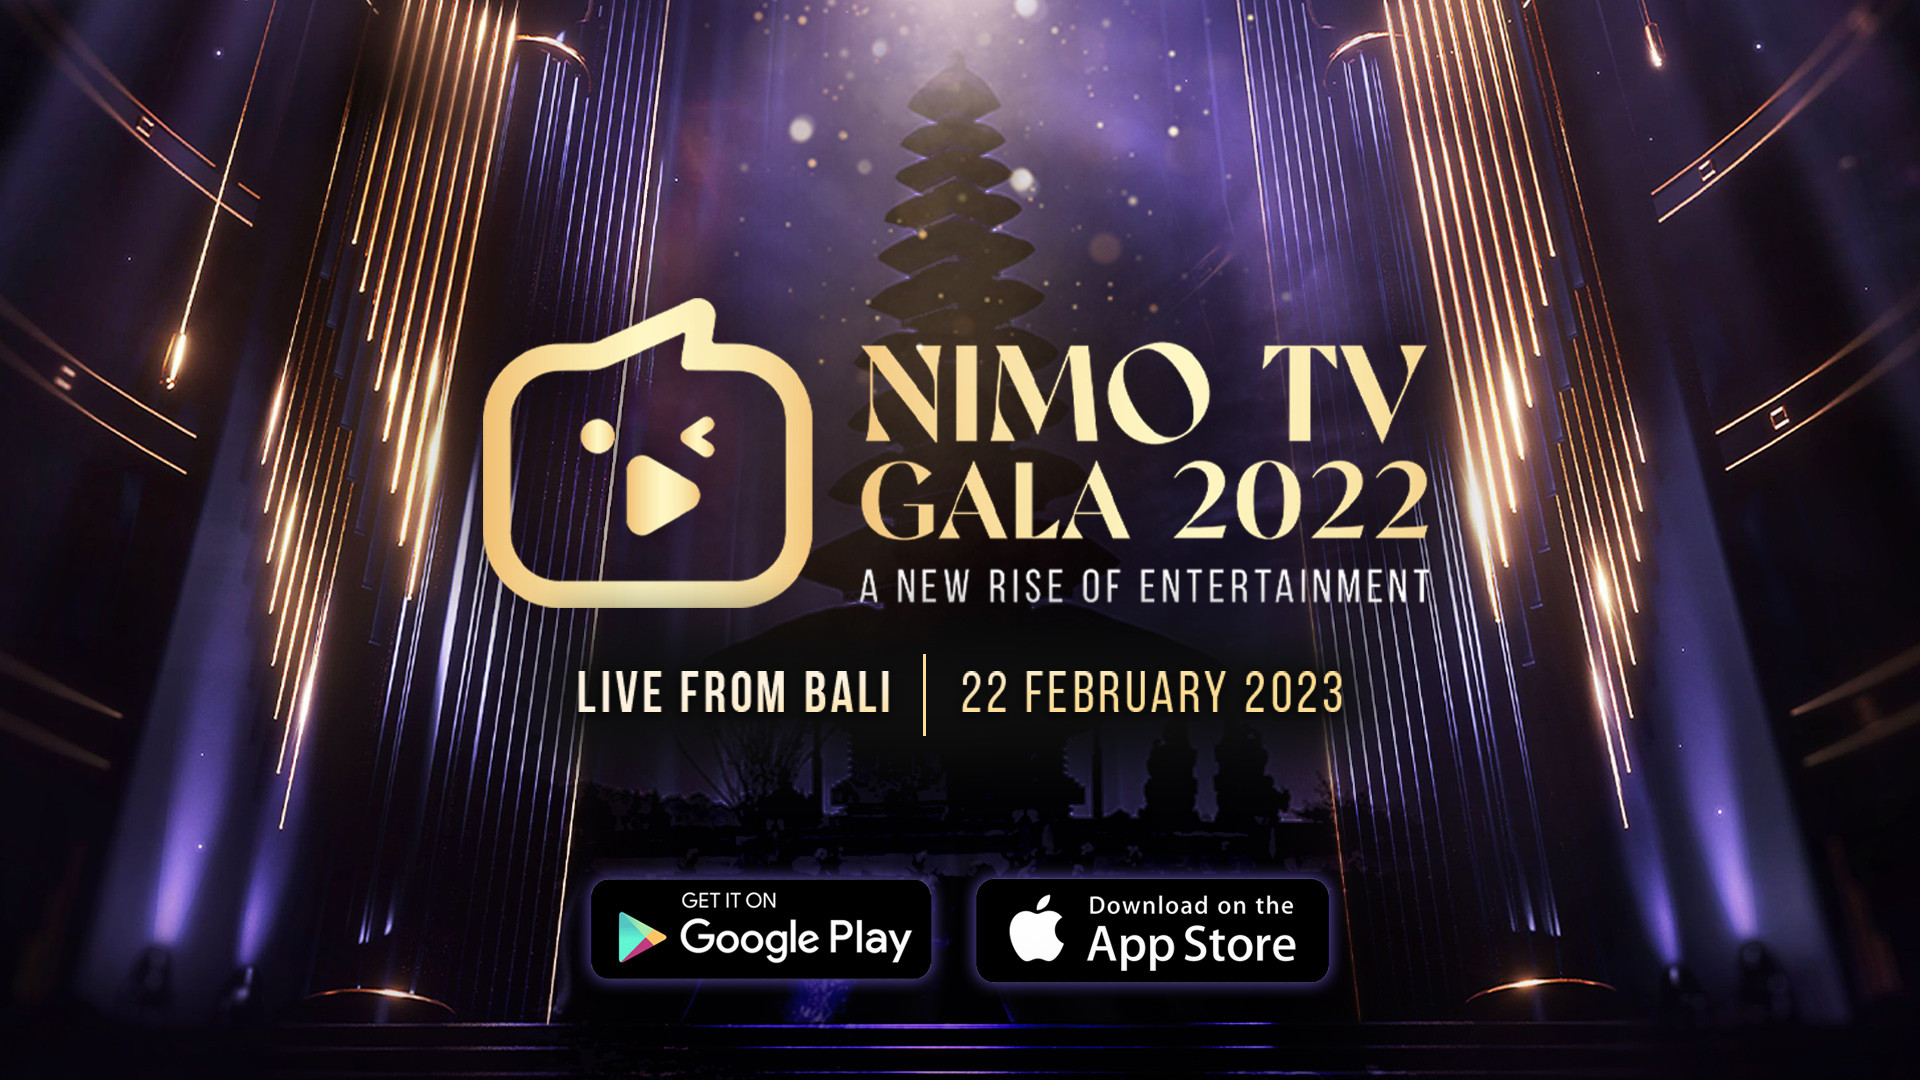 Nimo TV gelarGala 2022